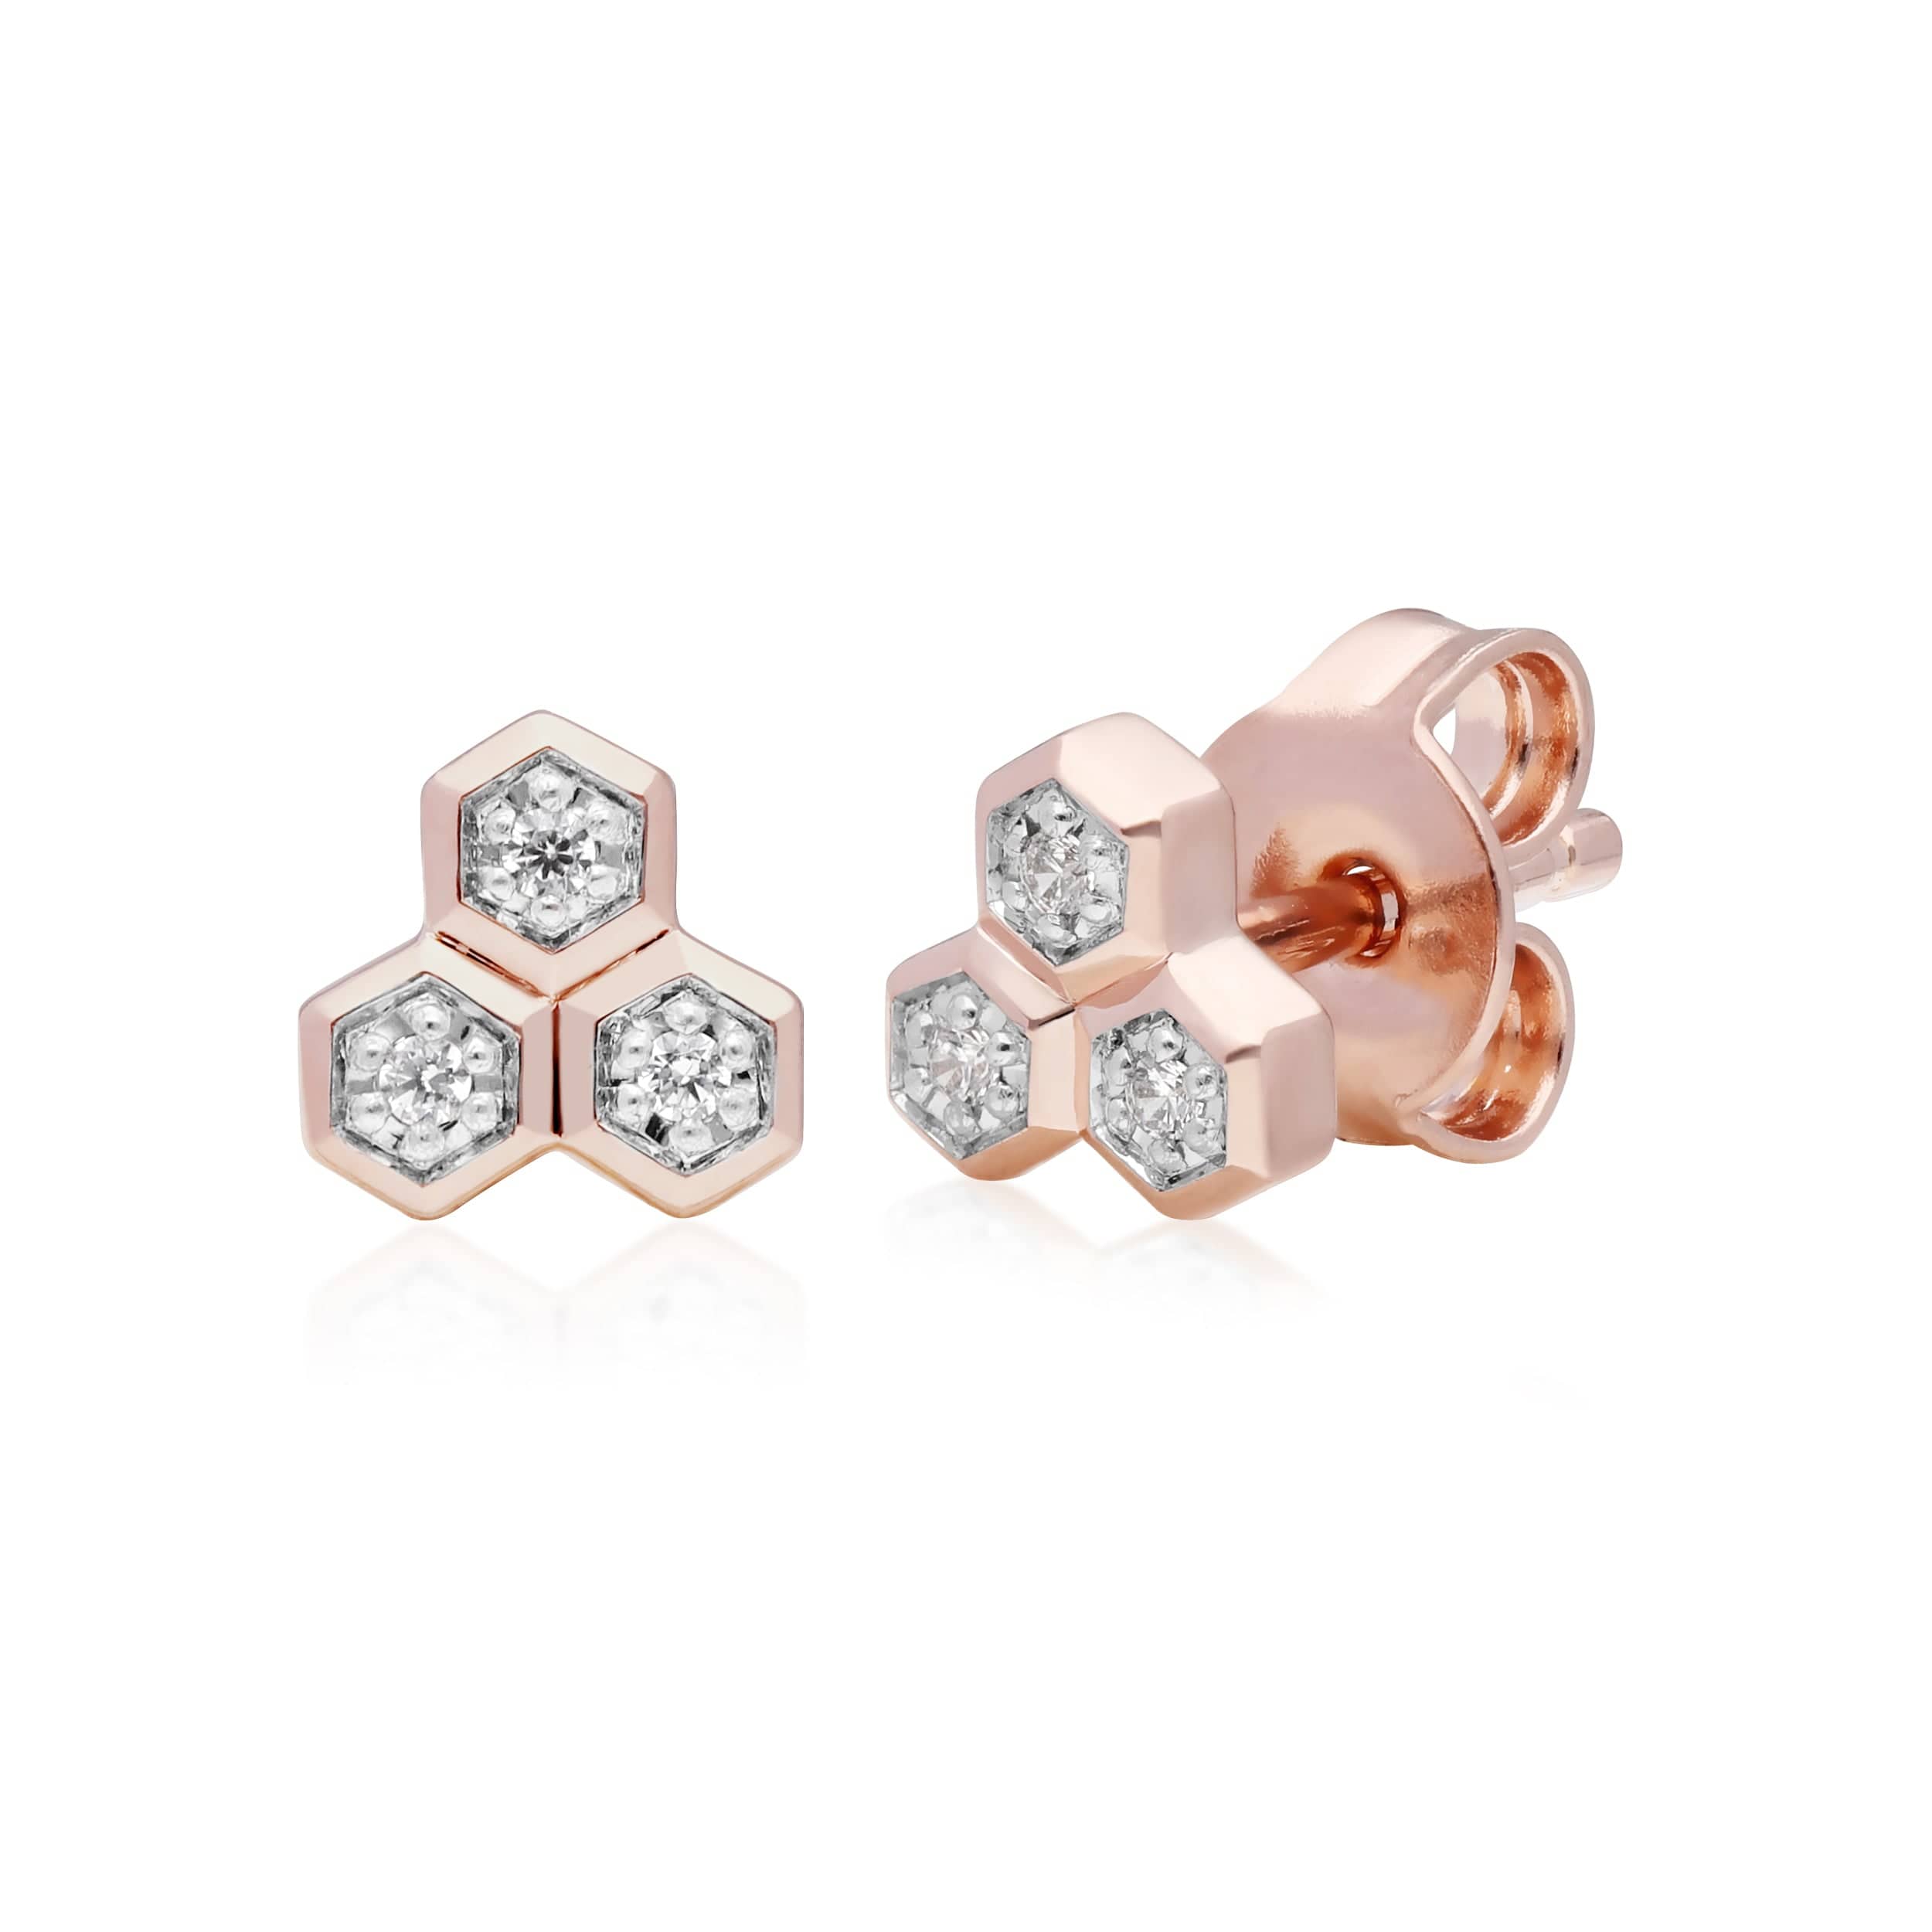 Photos - Earrings Diamond Geometric Trilogy Stud  in 9ct Rose Gold